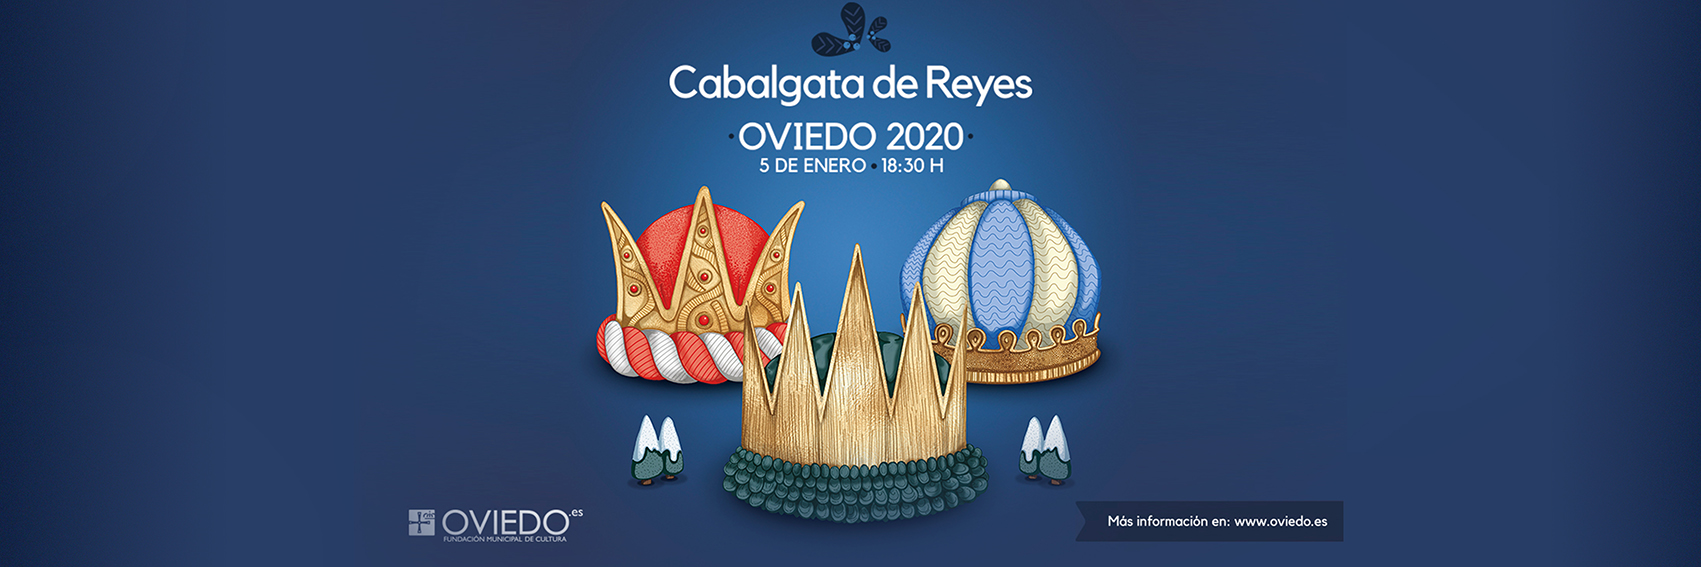 carteleria de Cabalgata Oviedo 2020